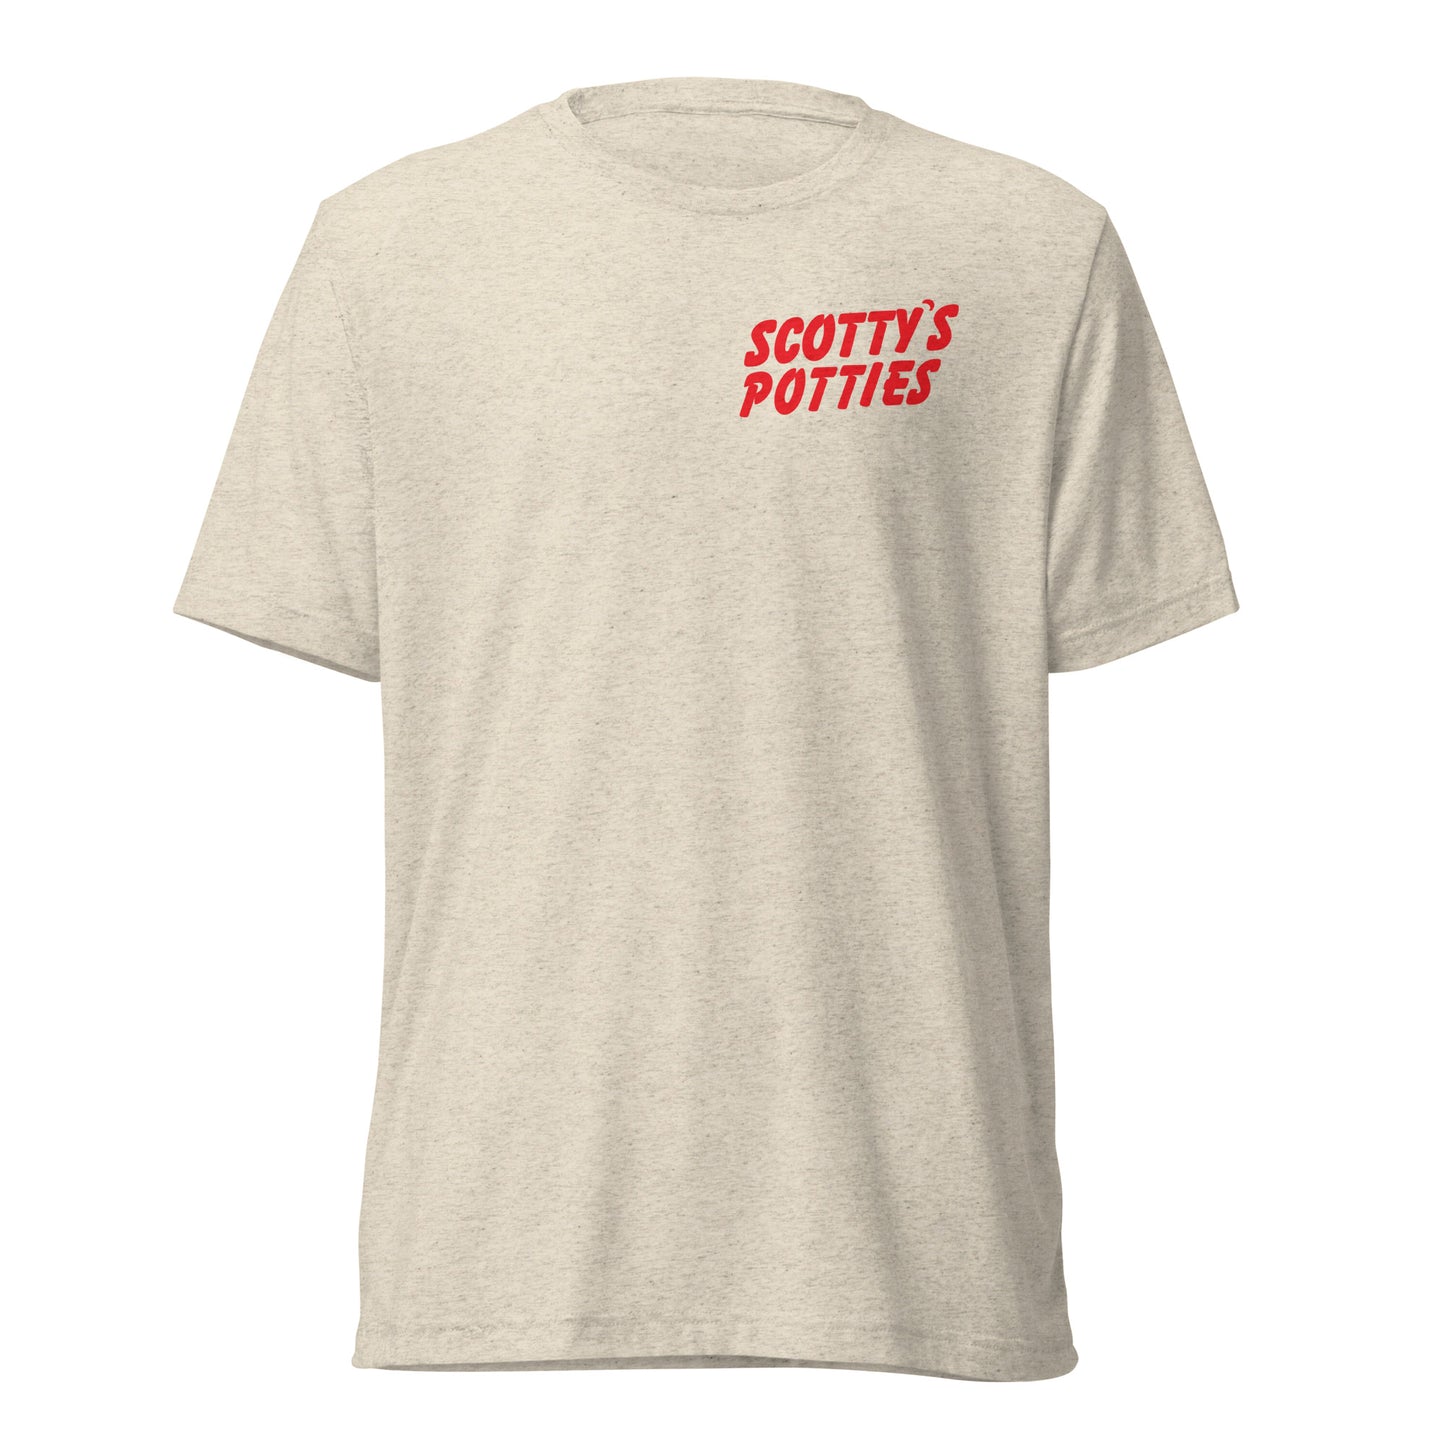 Scotty’s Potties T-shirt